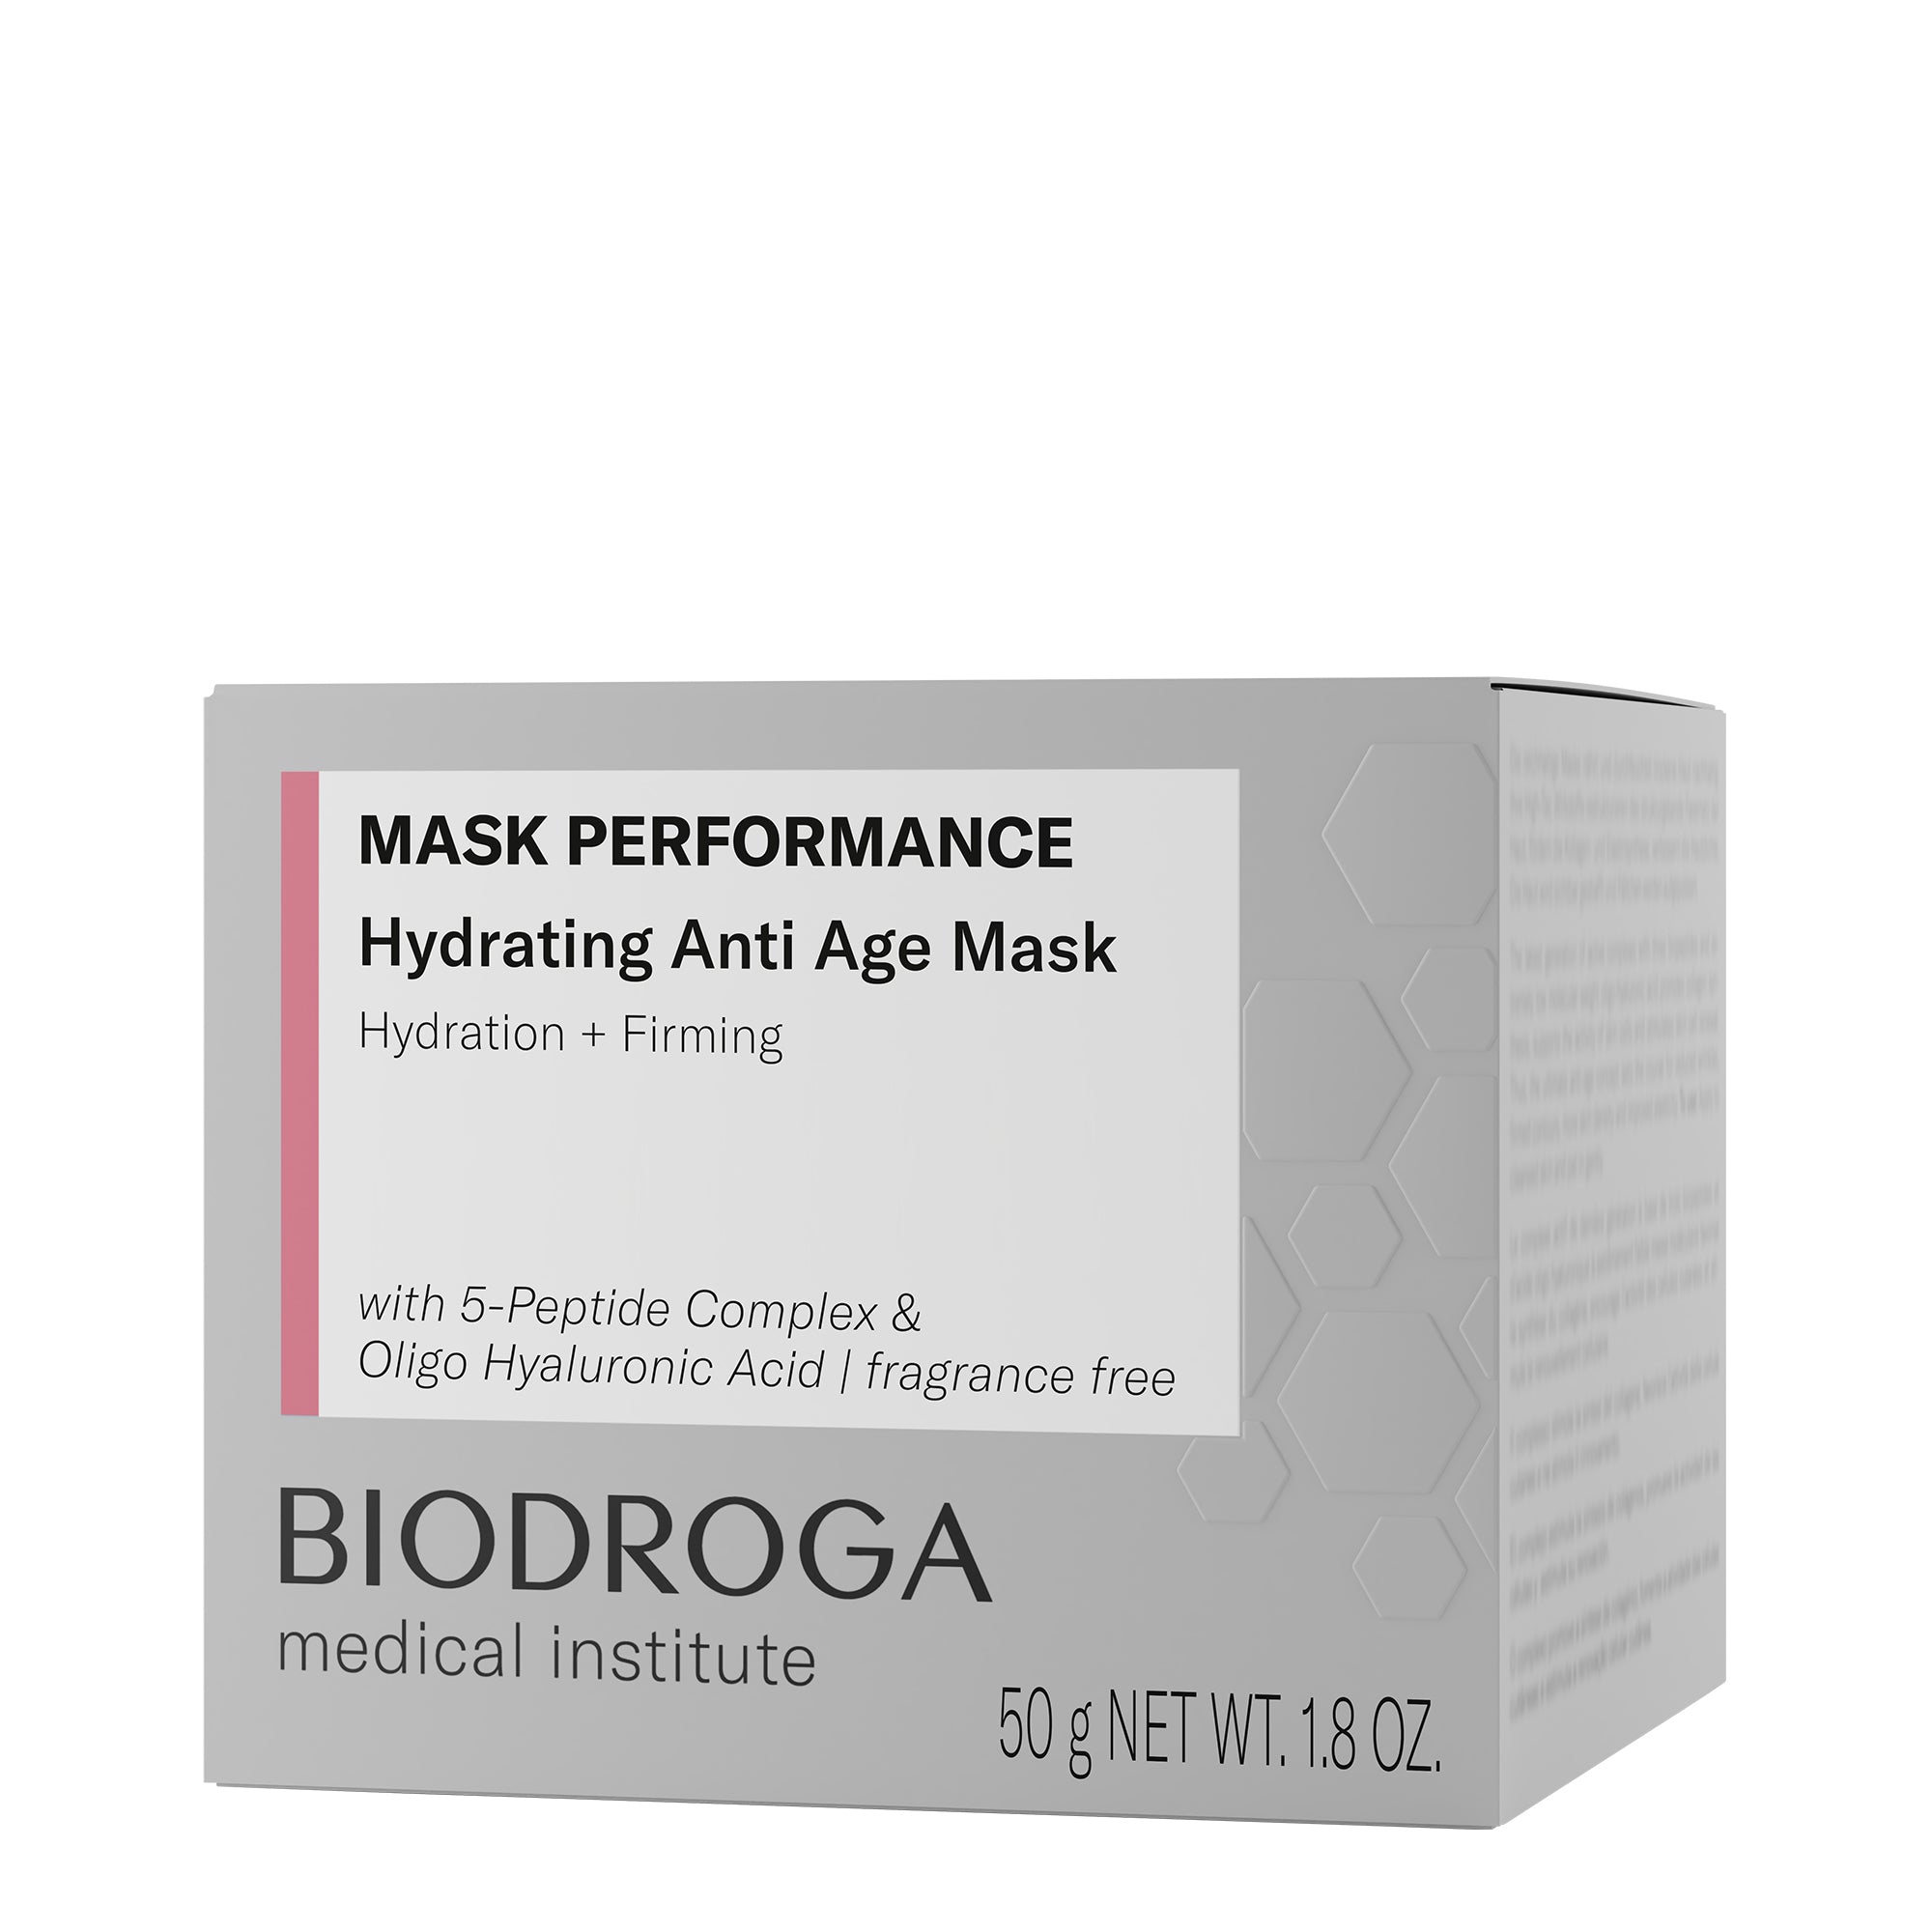 MASK PERFORMANCE Hydrating Anti-Age Mask